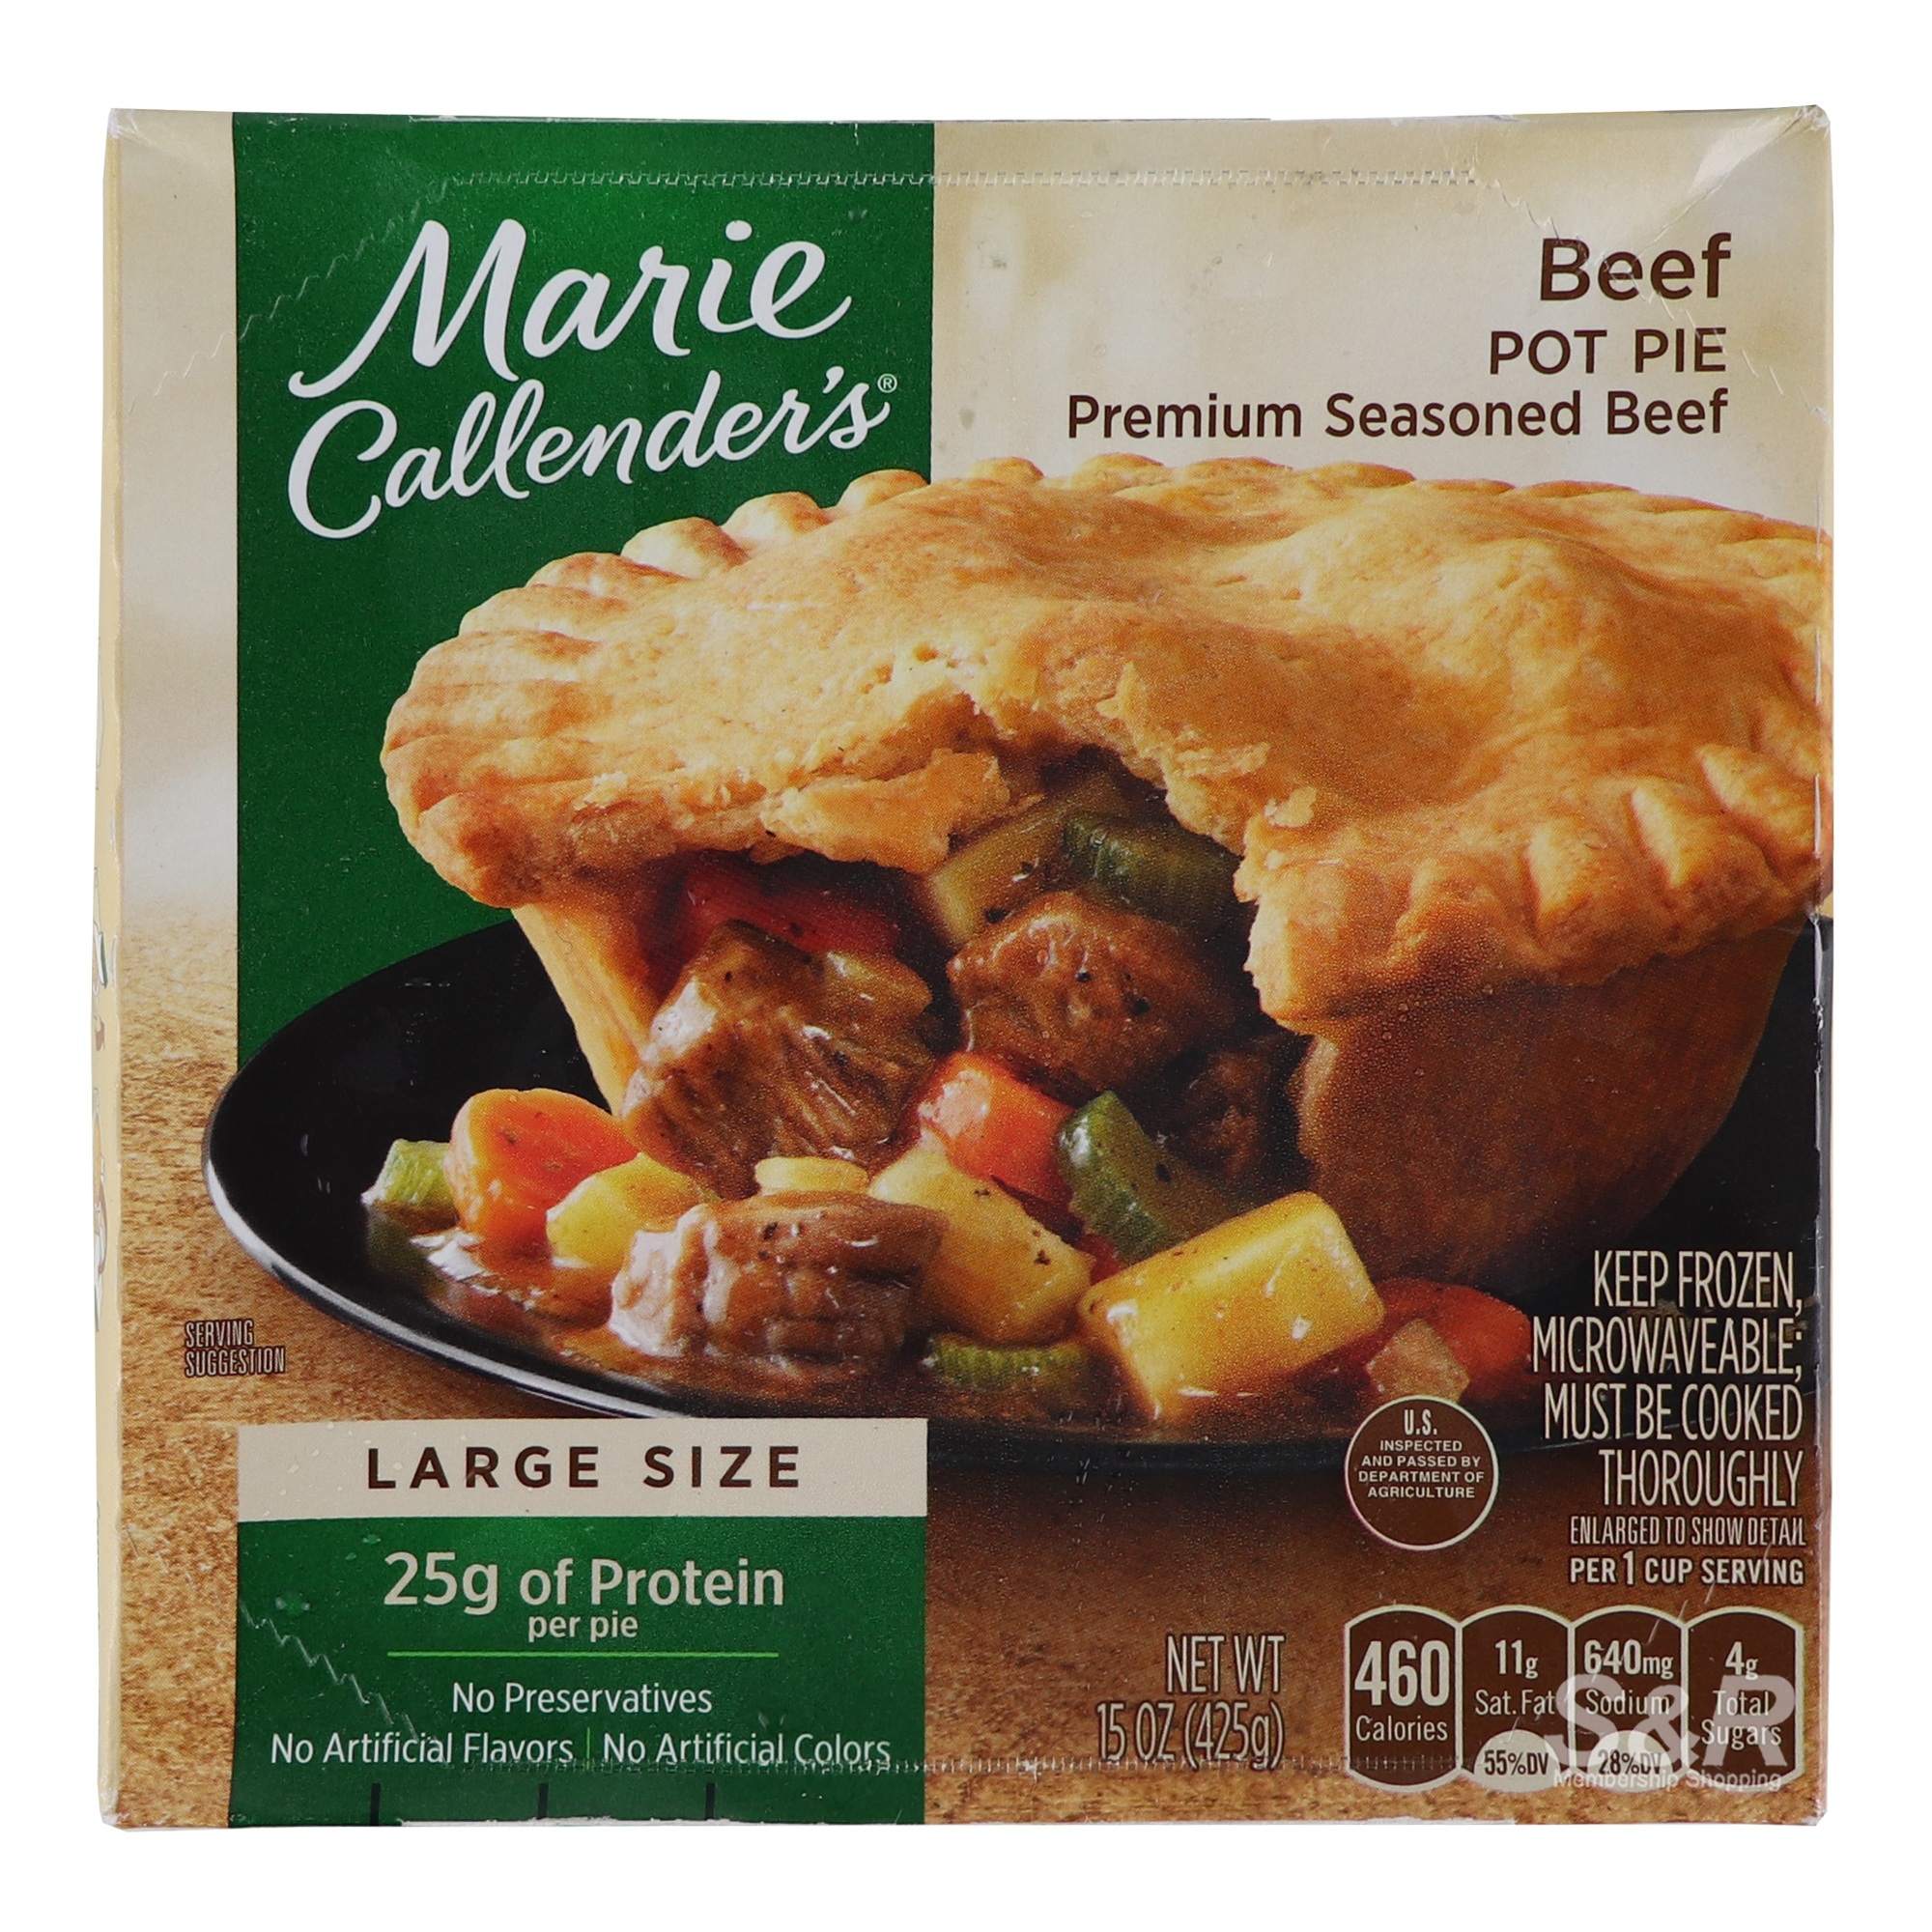 Marie Callender's Beef Pot Pie Large Size 425g